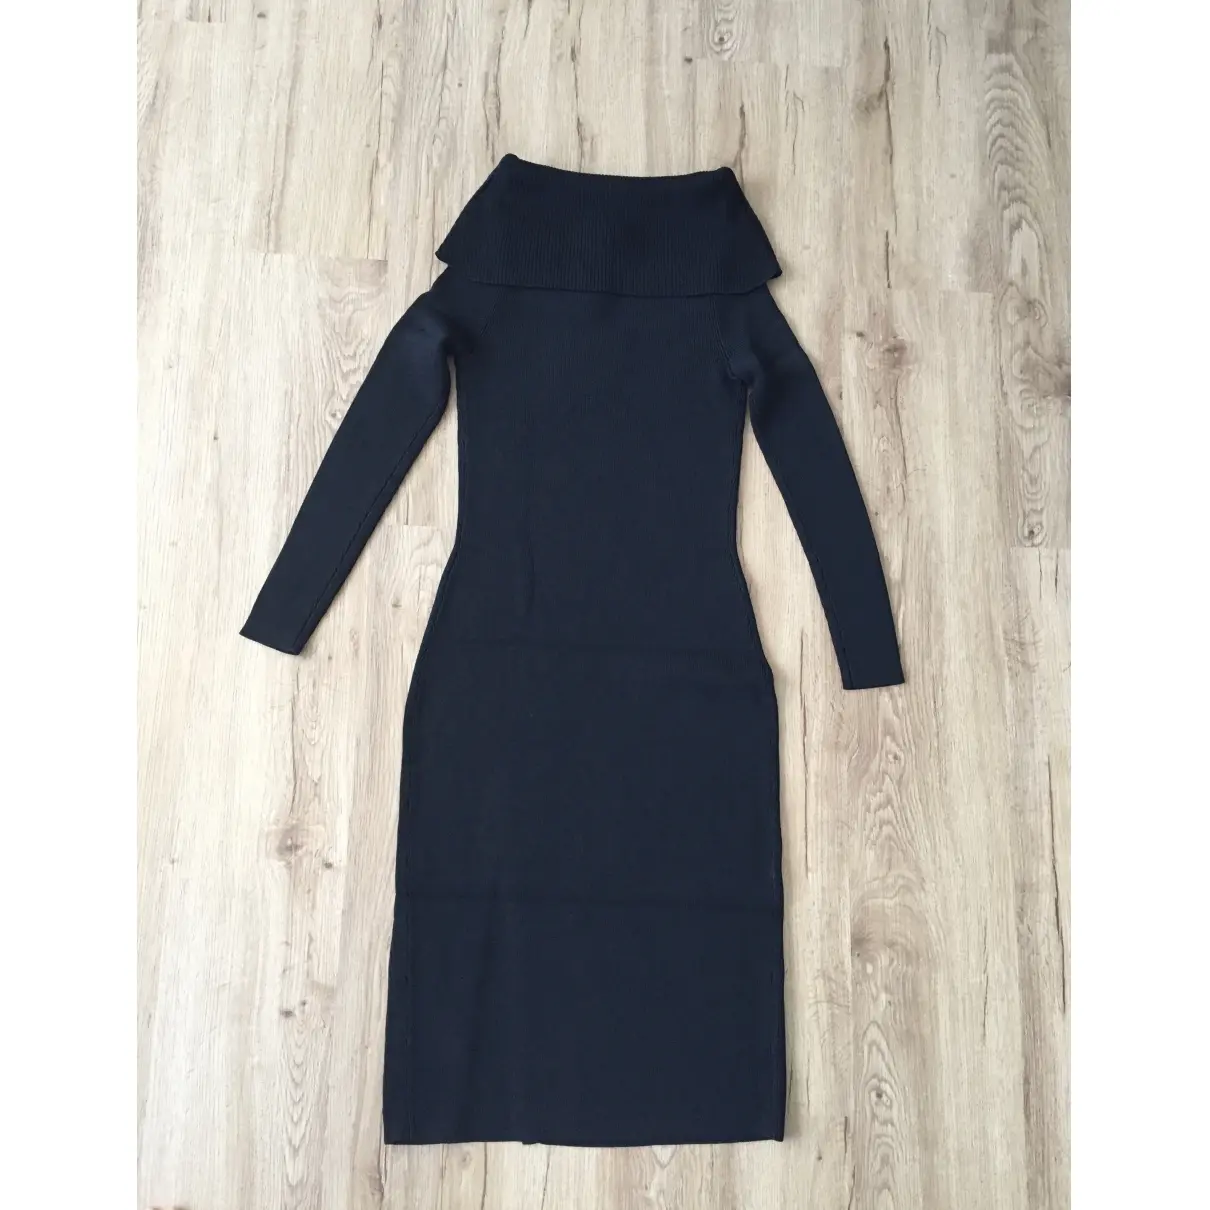 Totême Mid-length dress for sale